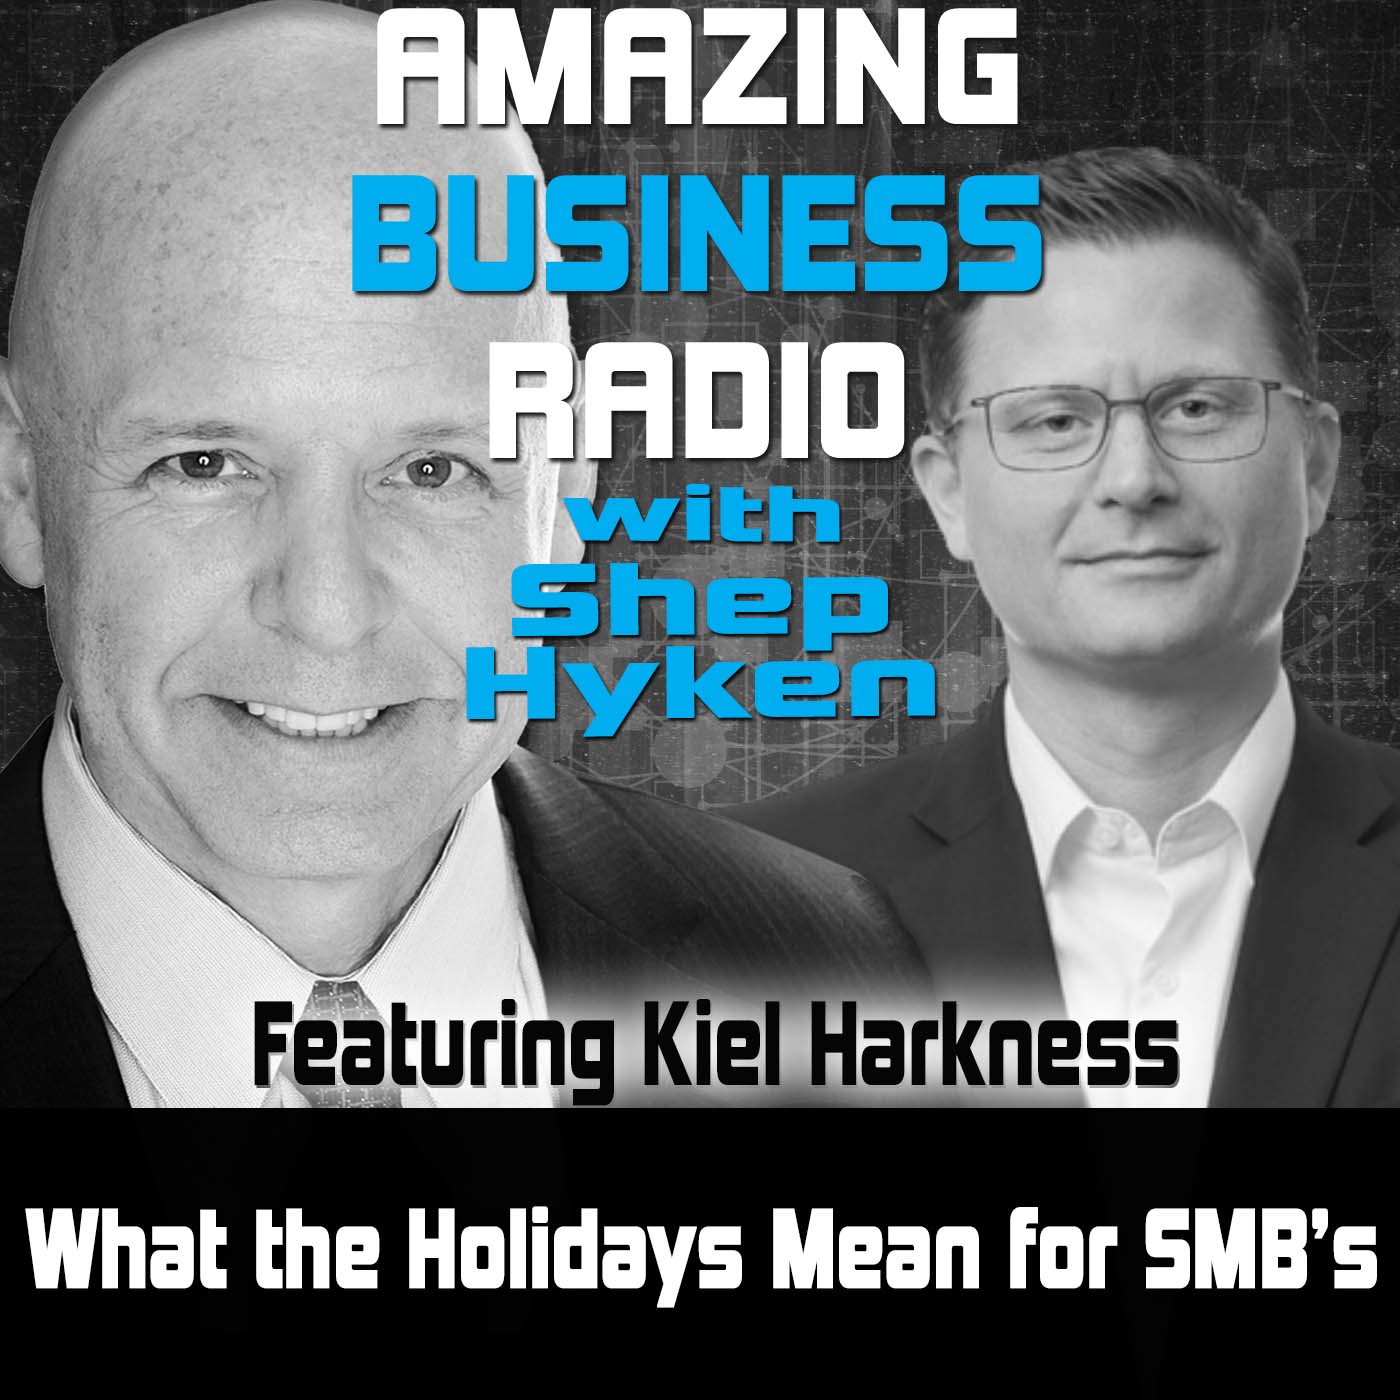 Amazing Business Radio: Kiel Harkness